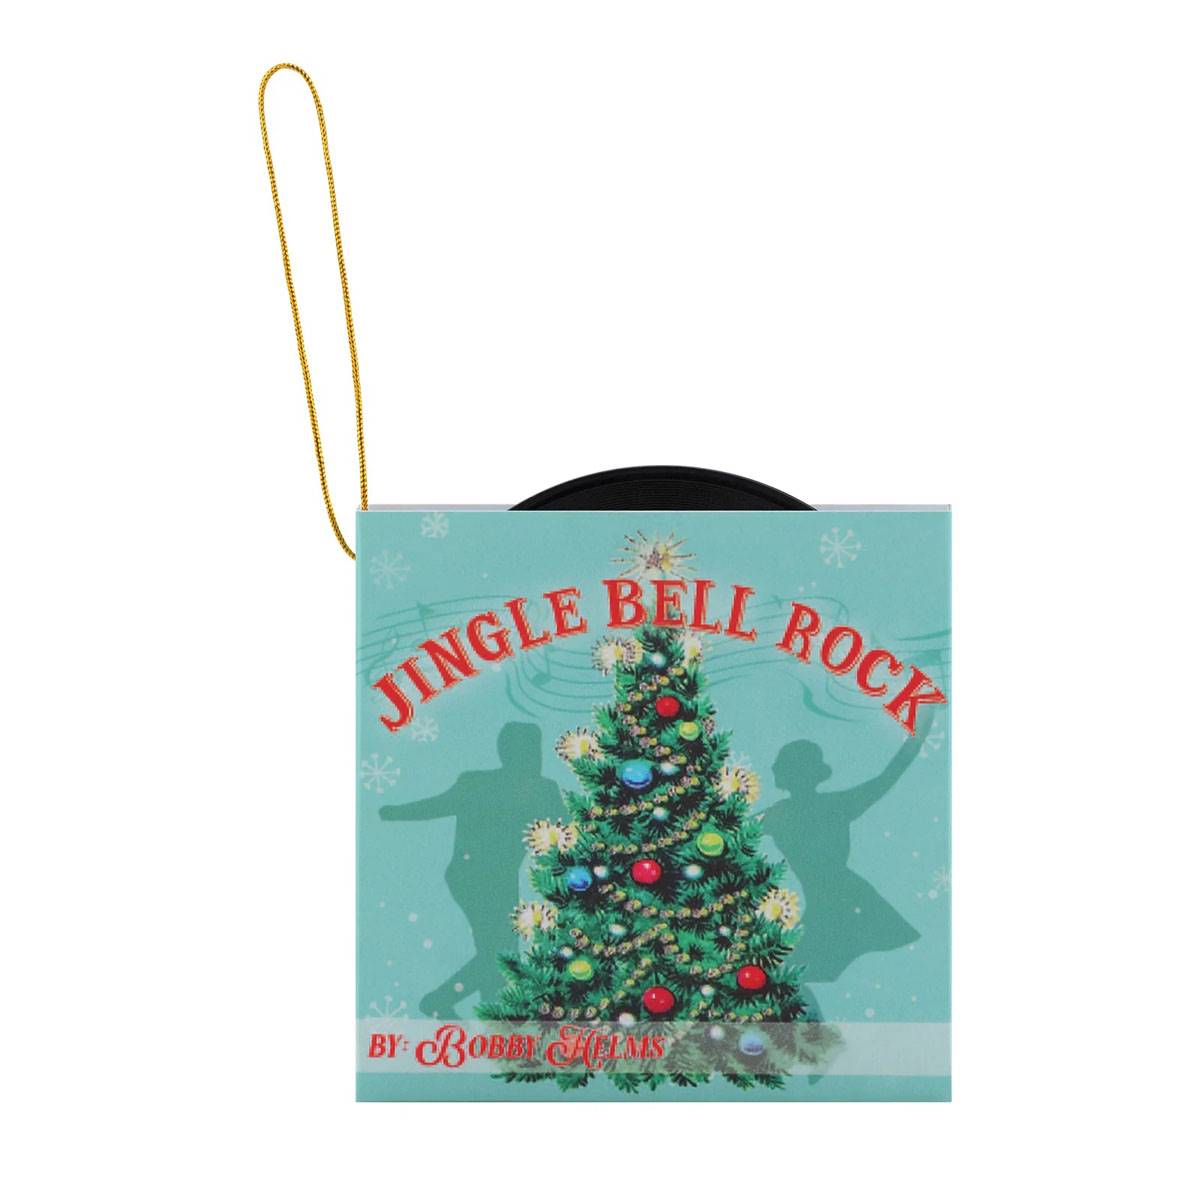 Mr. Christmas Jingle Bell Rock Mini Record Christmas Ornament